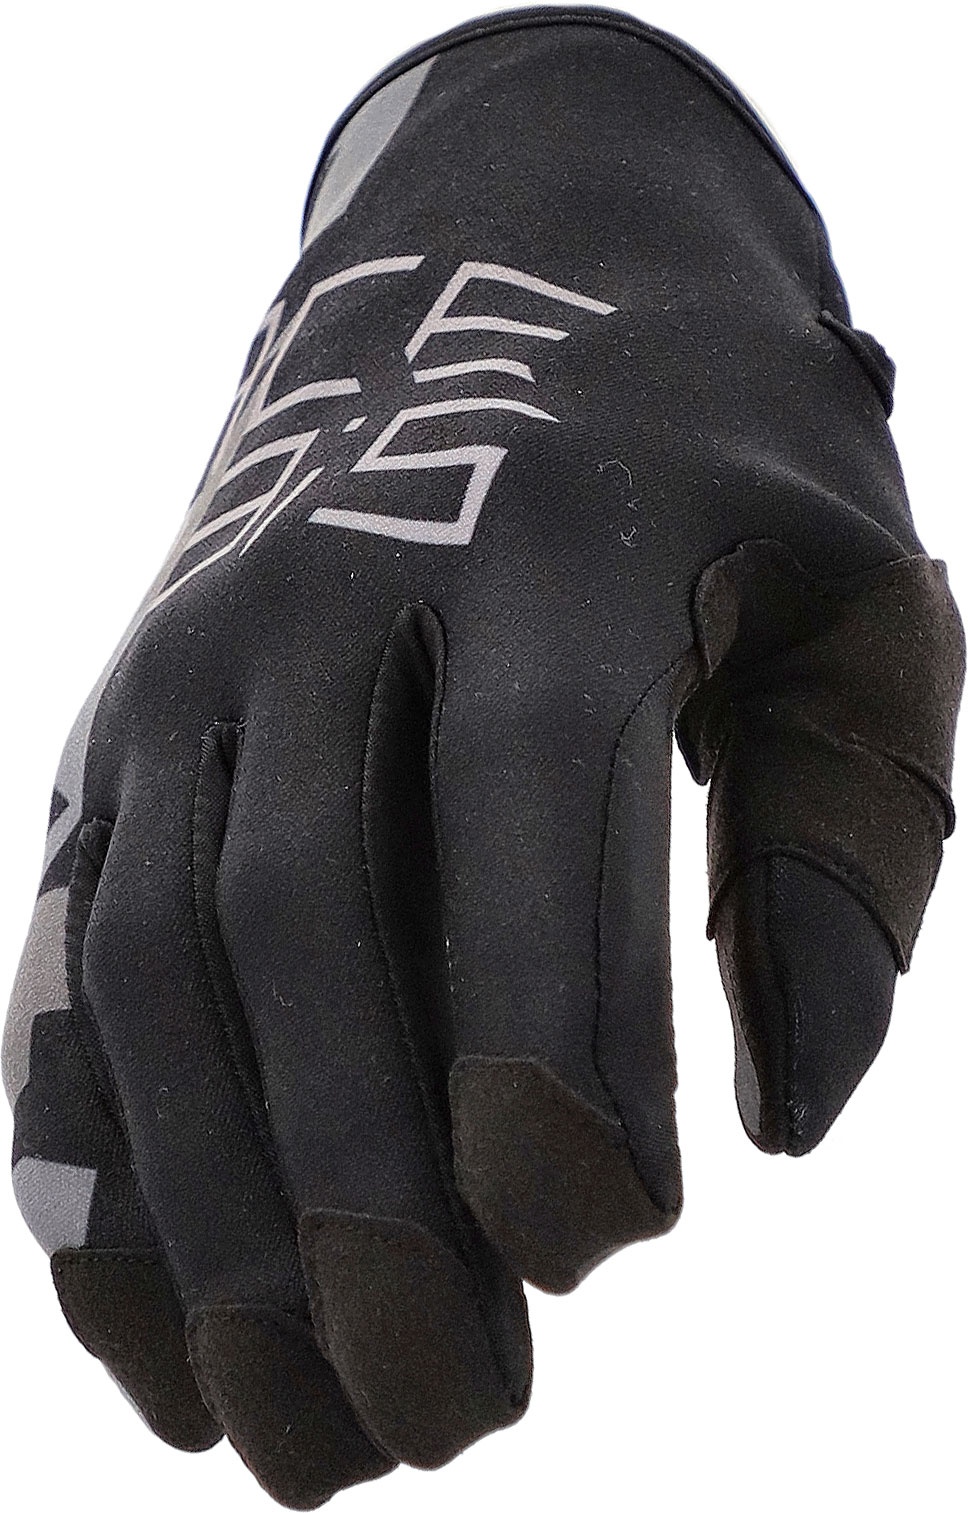 Acerbis Zero Degree 3.0, gants - Noir/Gris - 3XL